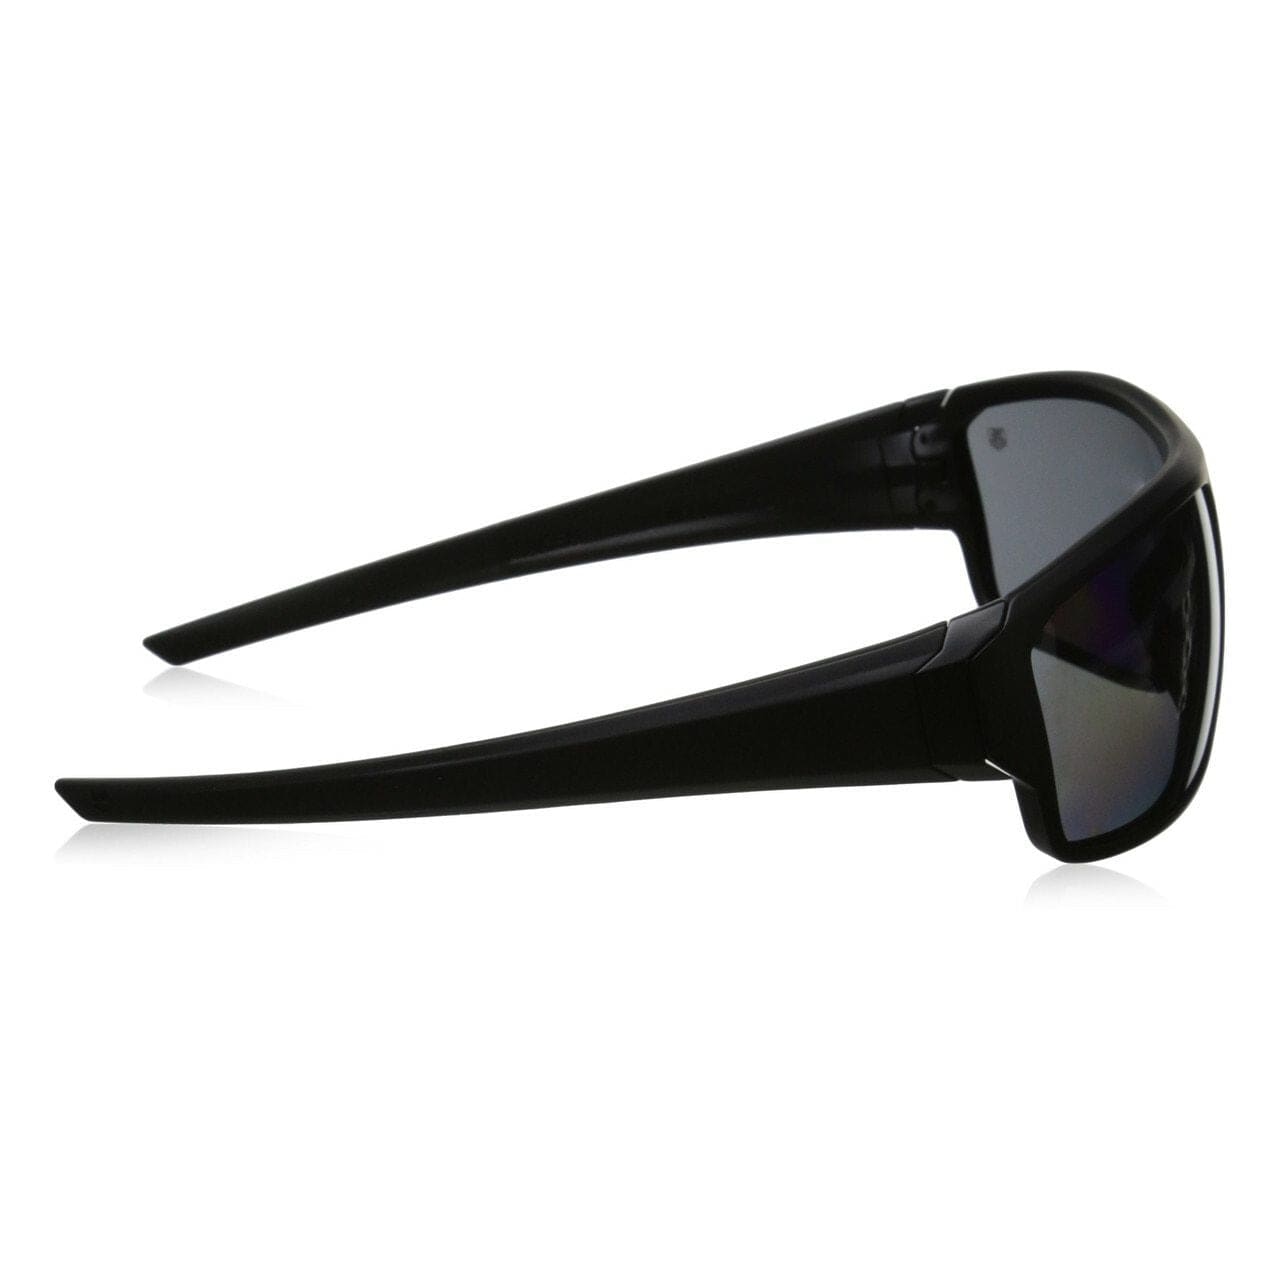 TAG Heuer 9222 104 Racer 2 Matte Black Wrap Around Grey Lens Sunglasses 669222104691503